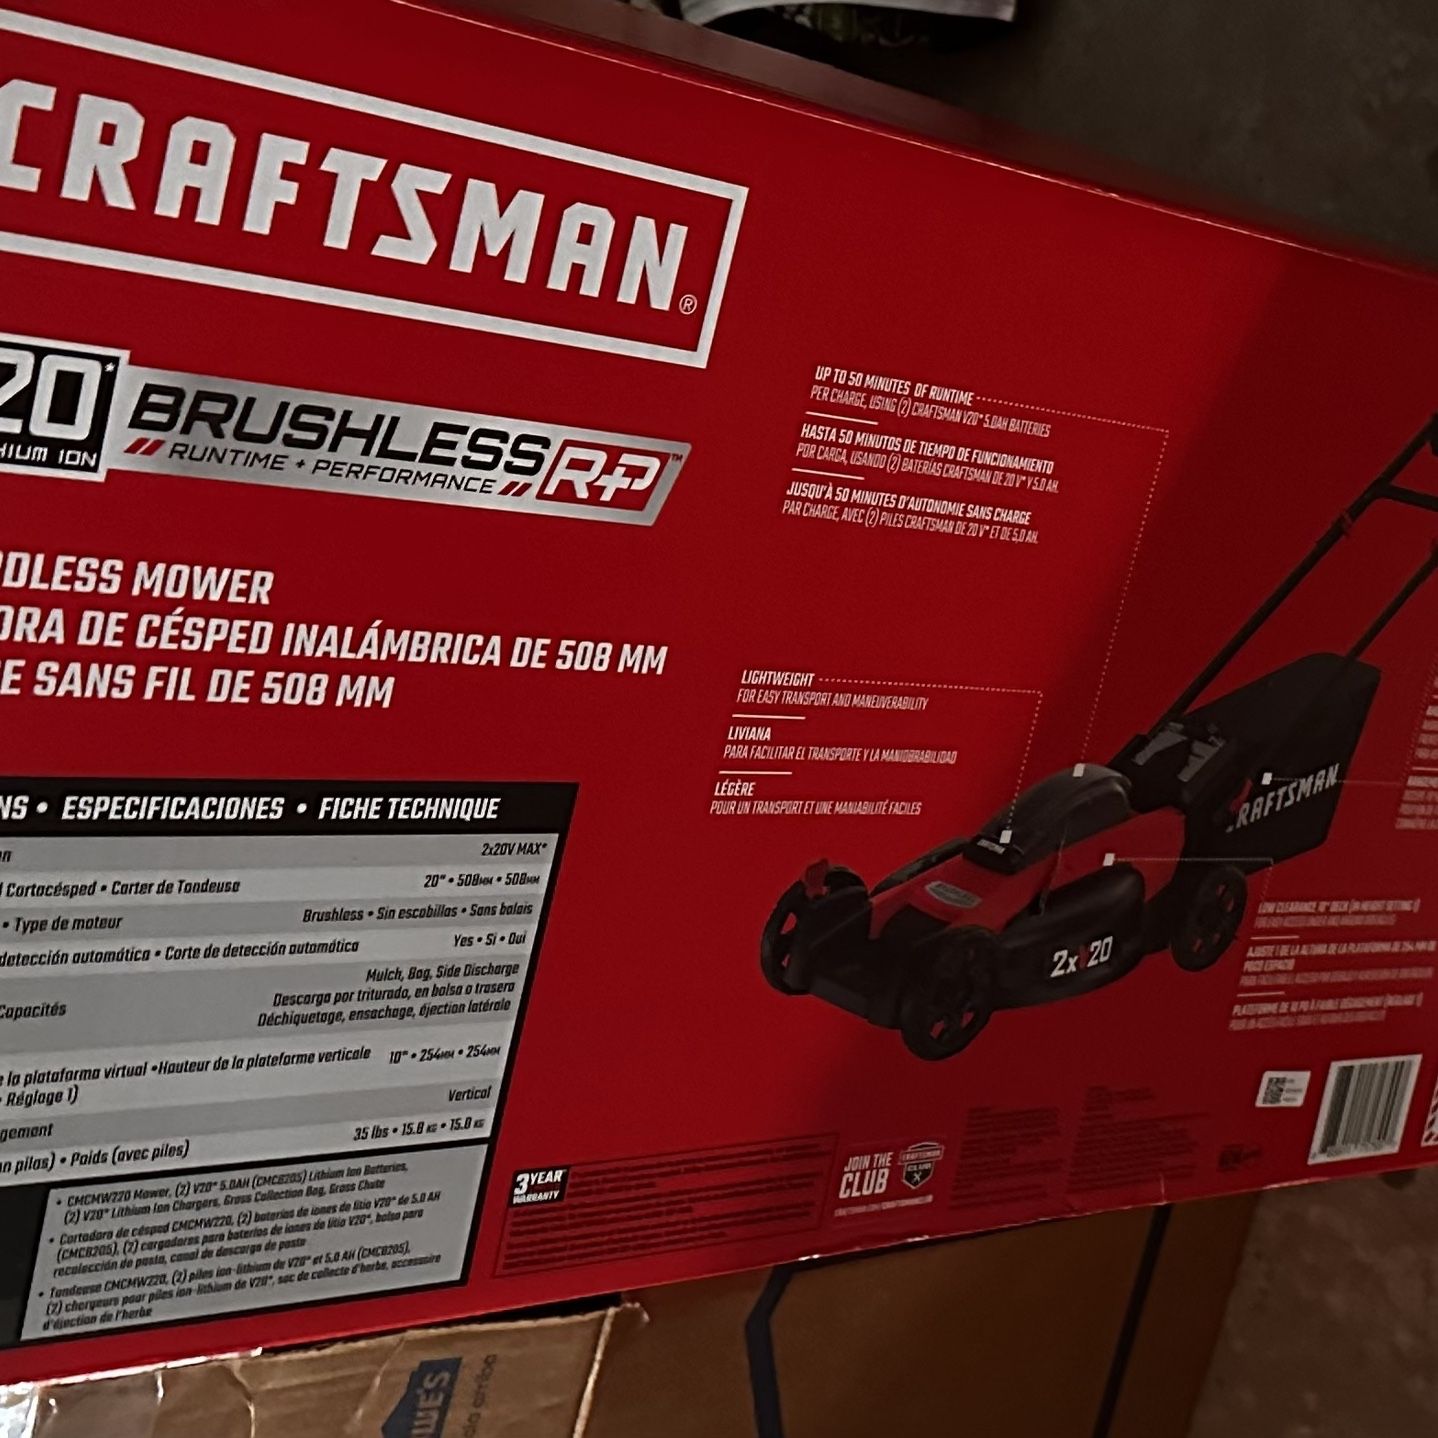 Craftsman’s Electric Lawn Mower, Blower, Weeder & Edger